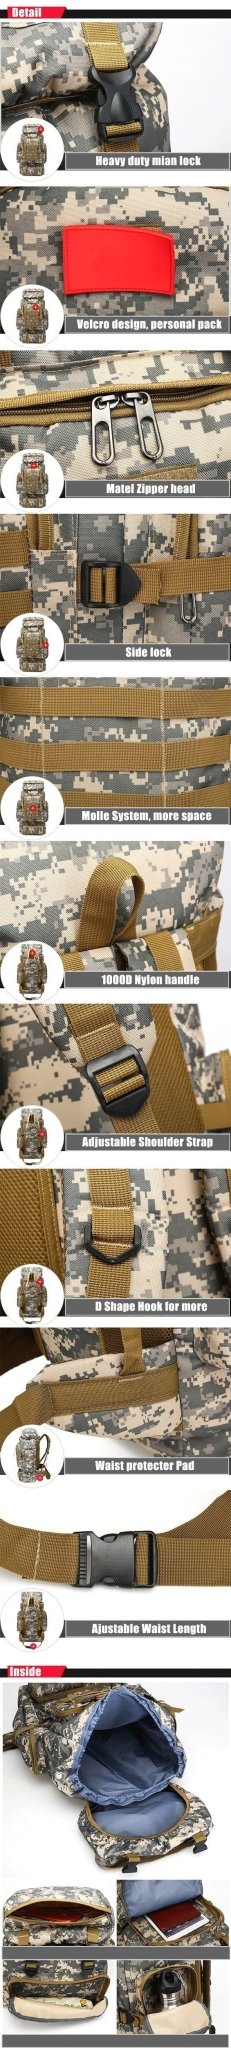 IMOK 0711BBLD02 Tactical Military Hiking Backpack 80L | KNAMAO.